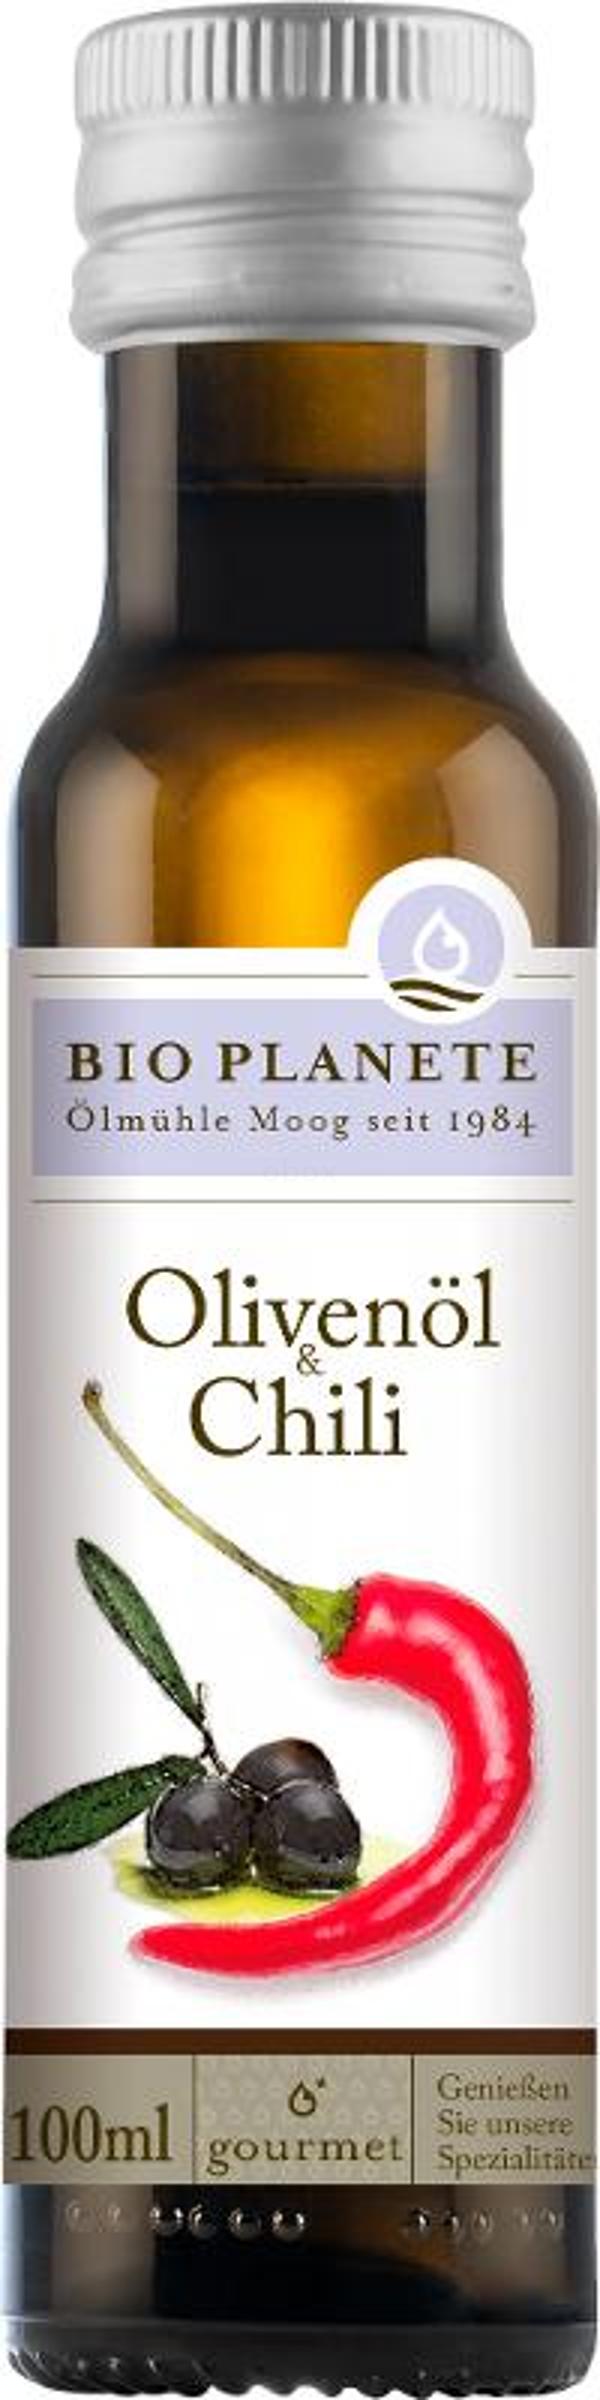 Produktfoto zu Olivenöl mit Chili